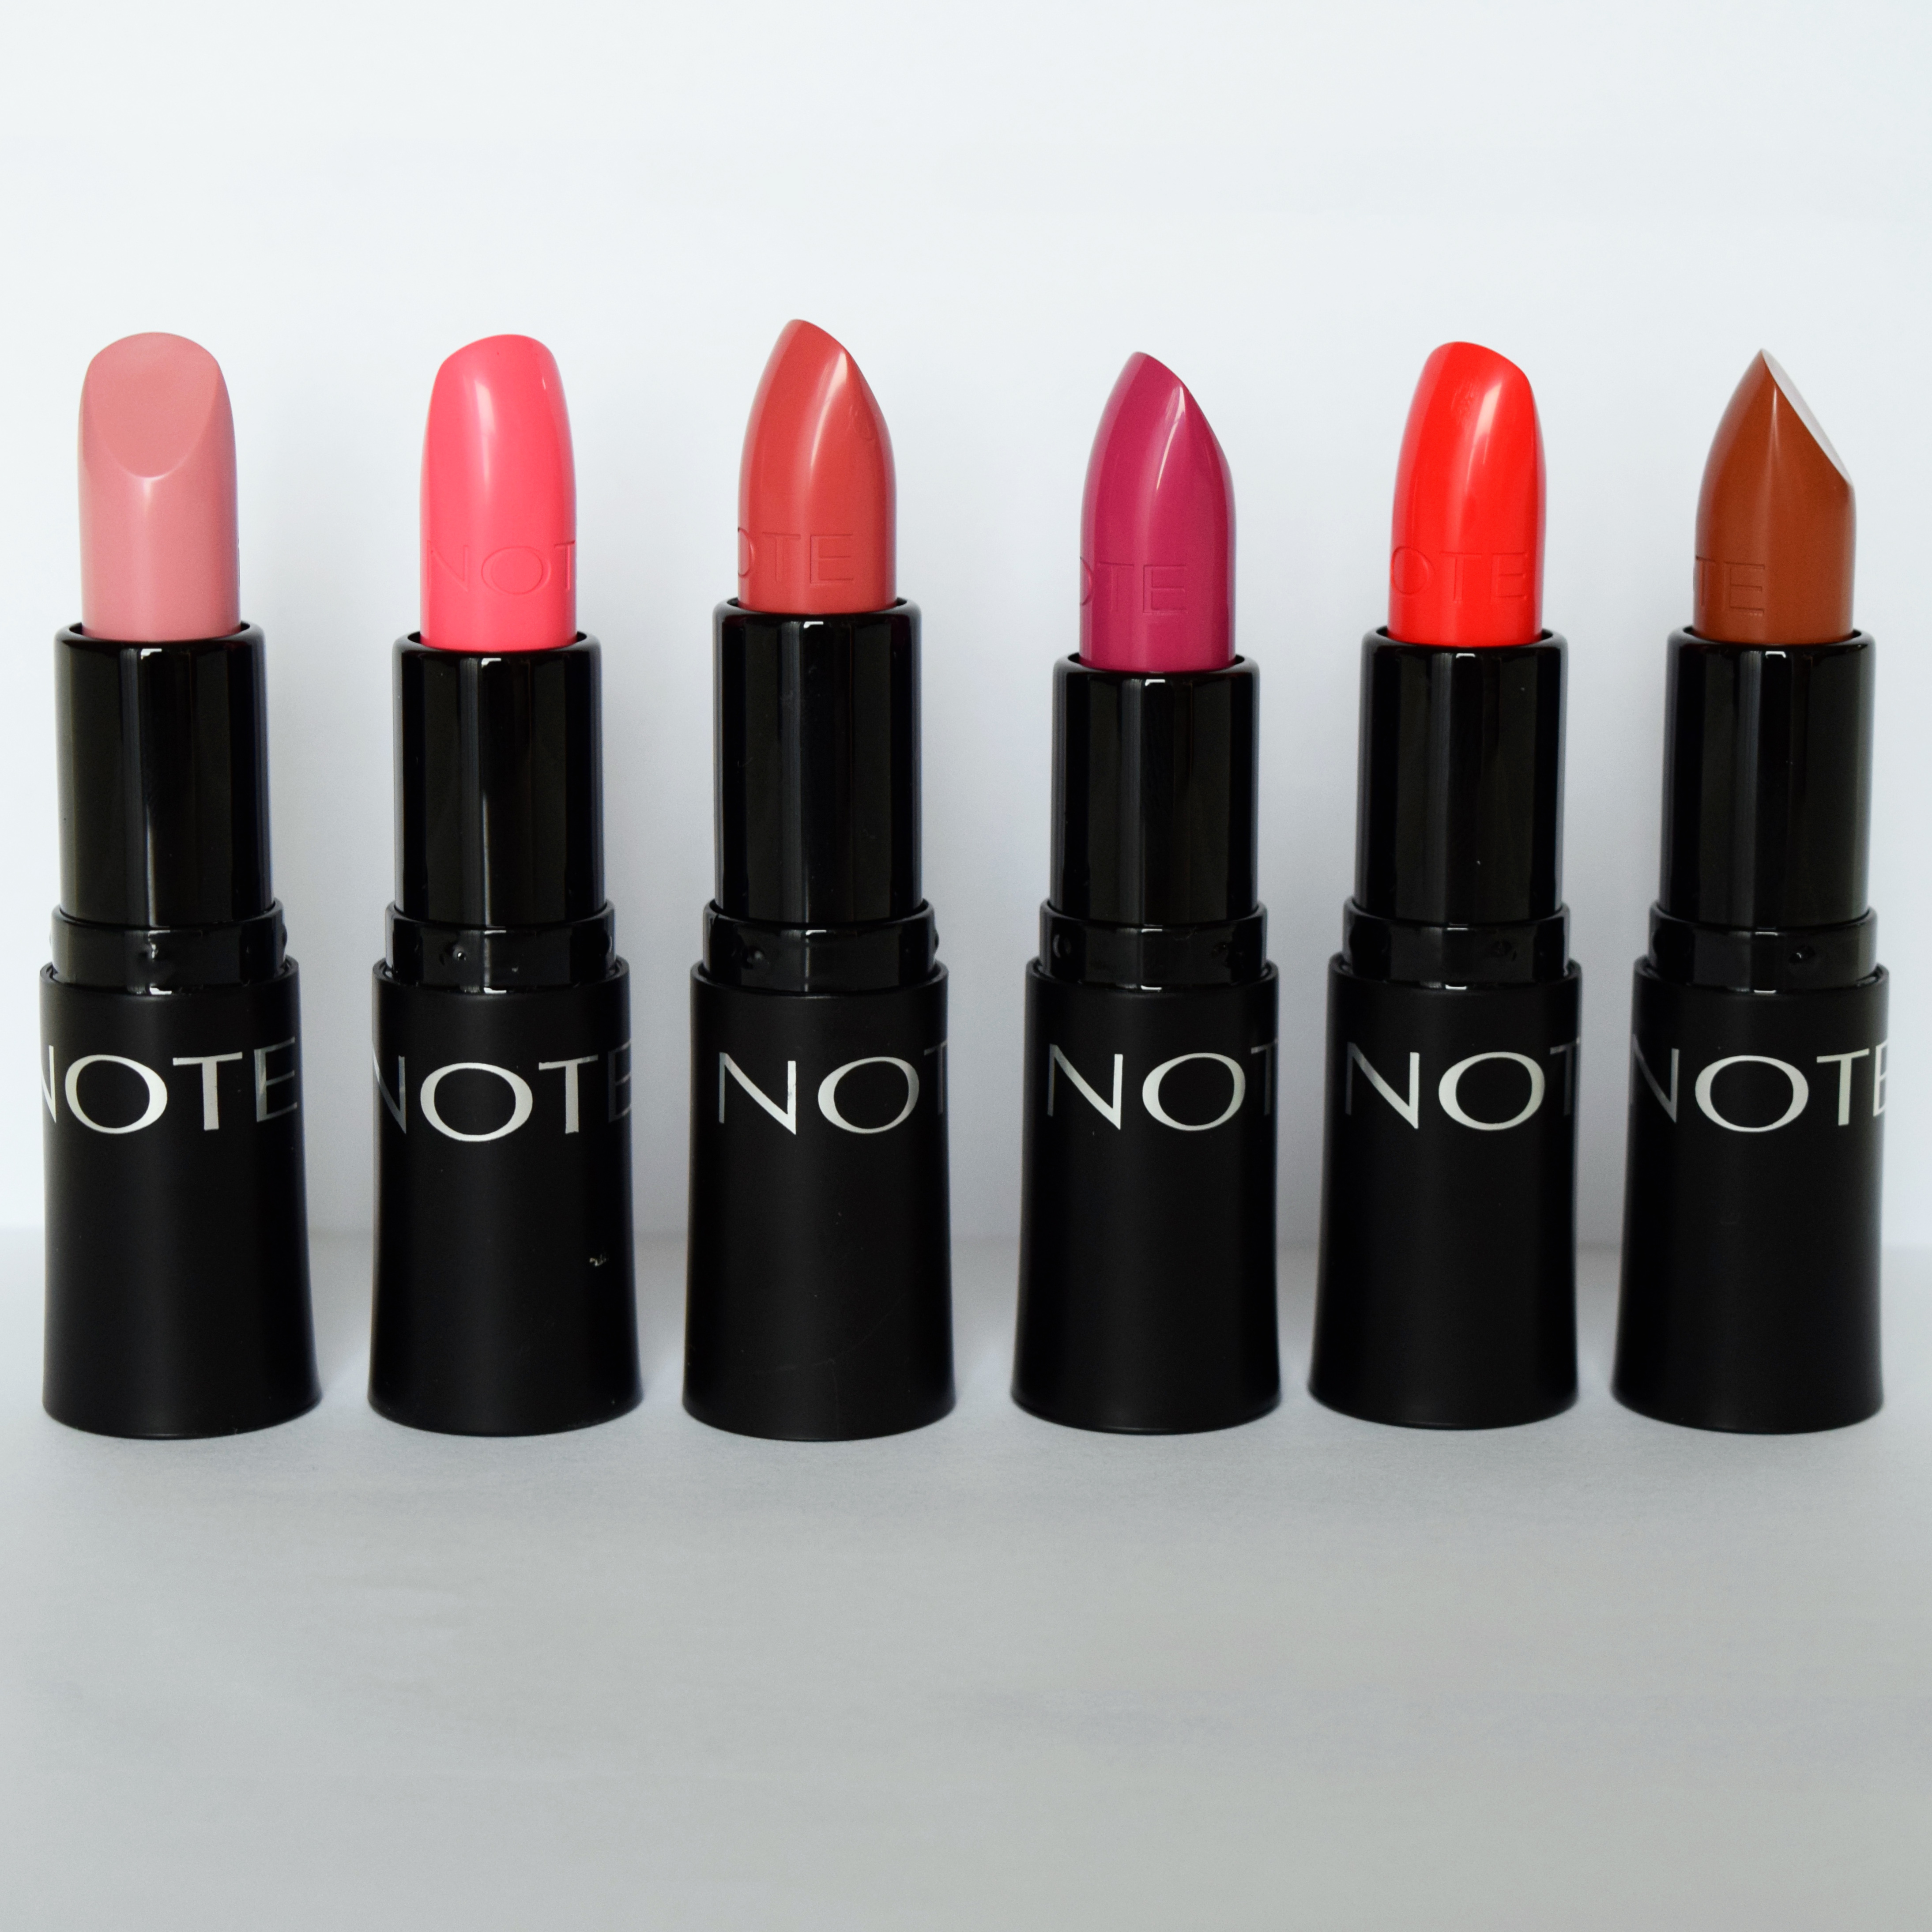 Note Cosmetics Lipsticks Featured